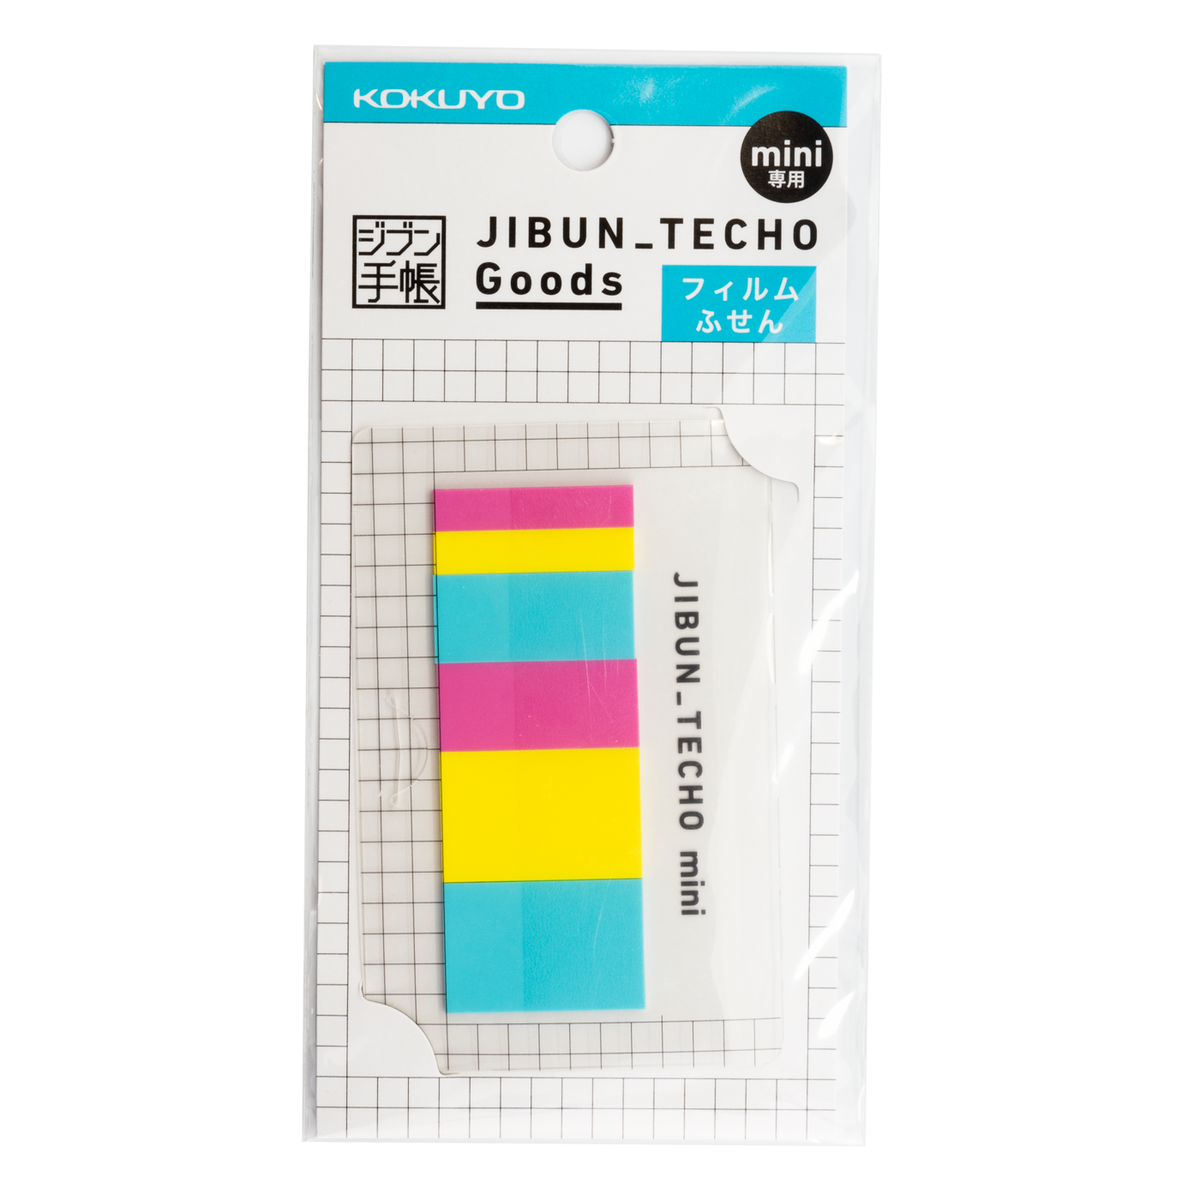 Kokuyo Jibun Techo Accessory - Film Sticky Notes - Mini B6 Slim